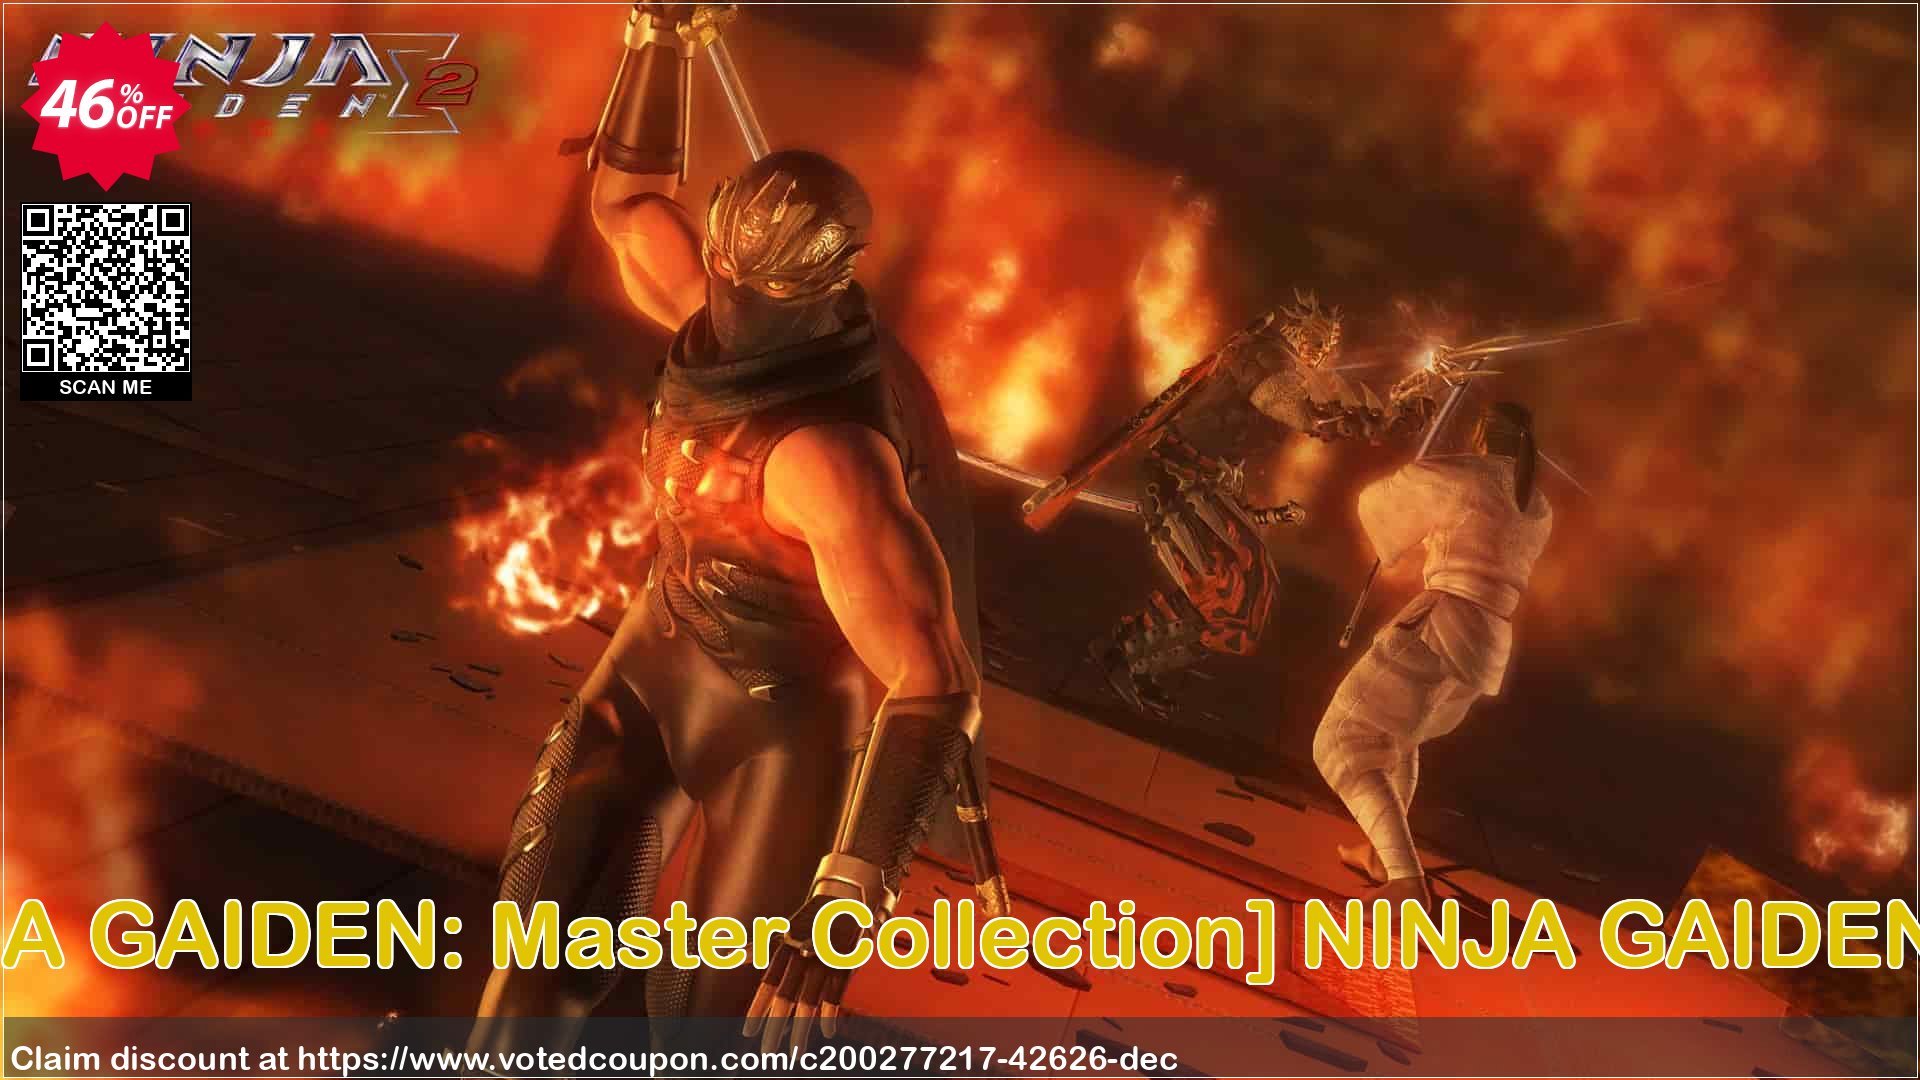 /NINJA GAIDEN: Master Collection/ NINJA GAIDEN Σ PC Coupon Code May 2024, 46% OFF - VotedCoupon